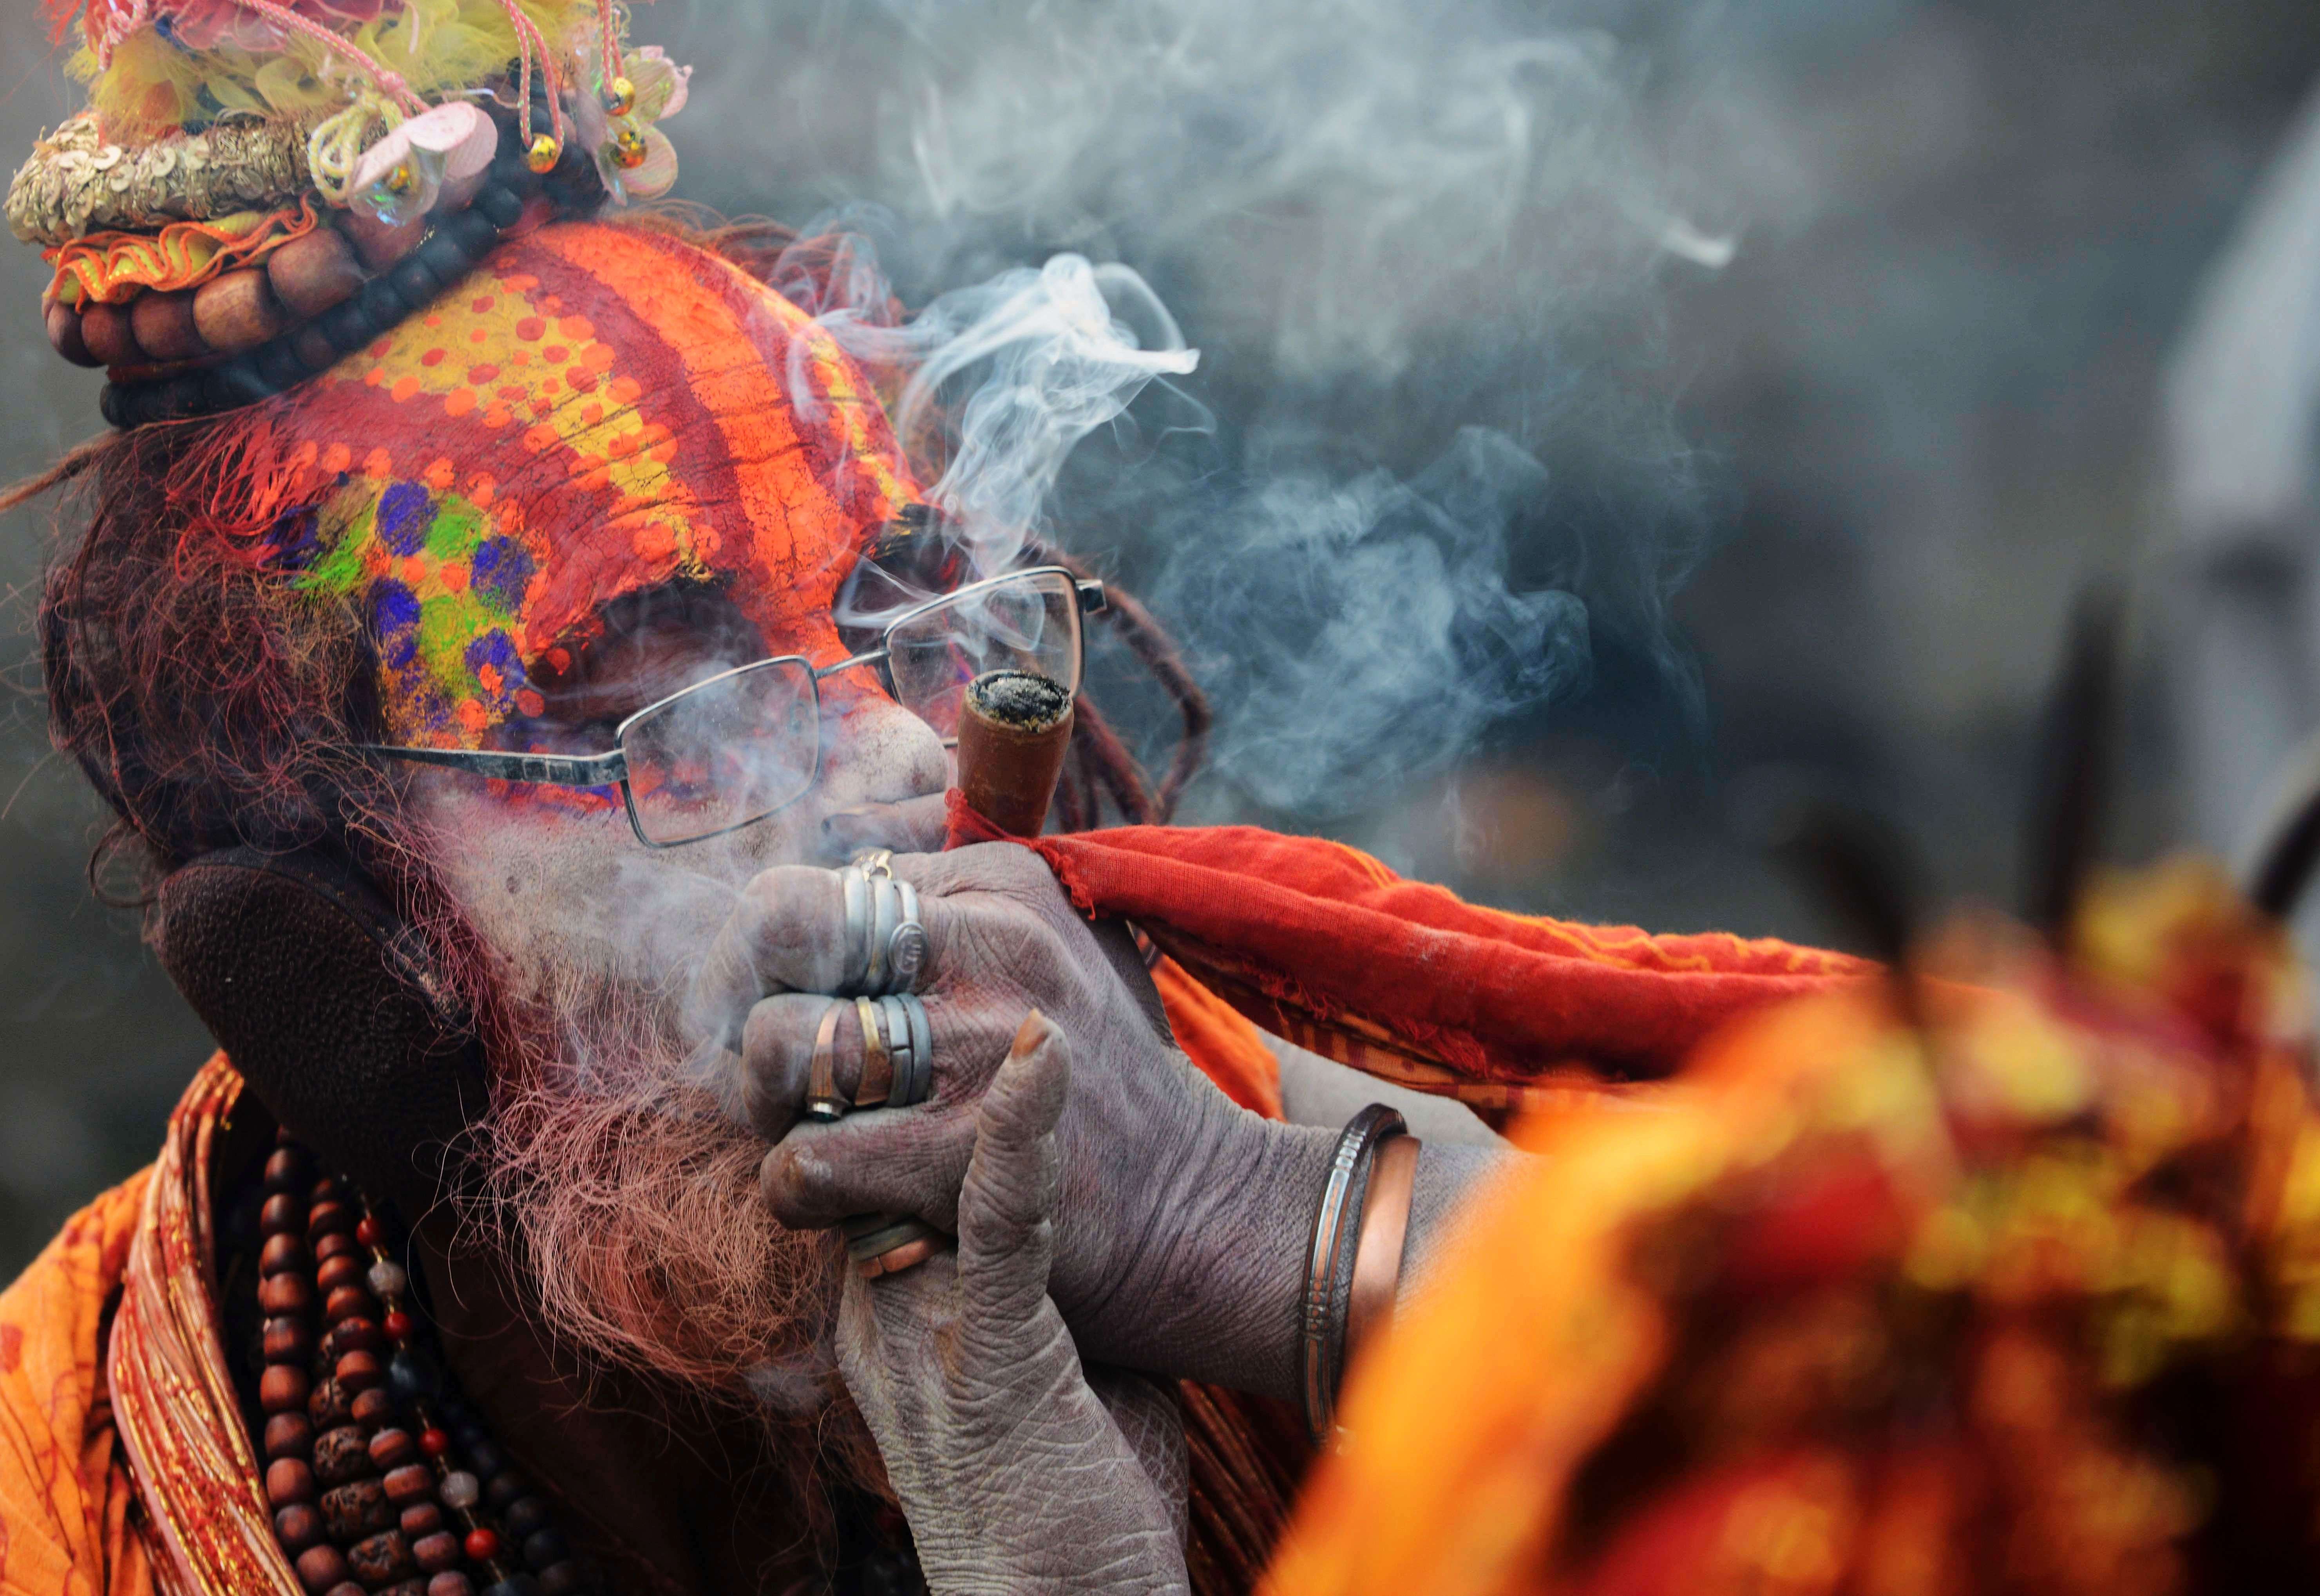 A sadhu smokes marijuana from a clay pipe as a holy offering for Lord Shiva, the Hindu god of creation and destruction, during the Maha Shivaratri festival in Kathmandu. (AFP PHOTO / PRAKASH MATHEMA)